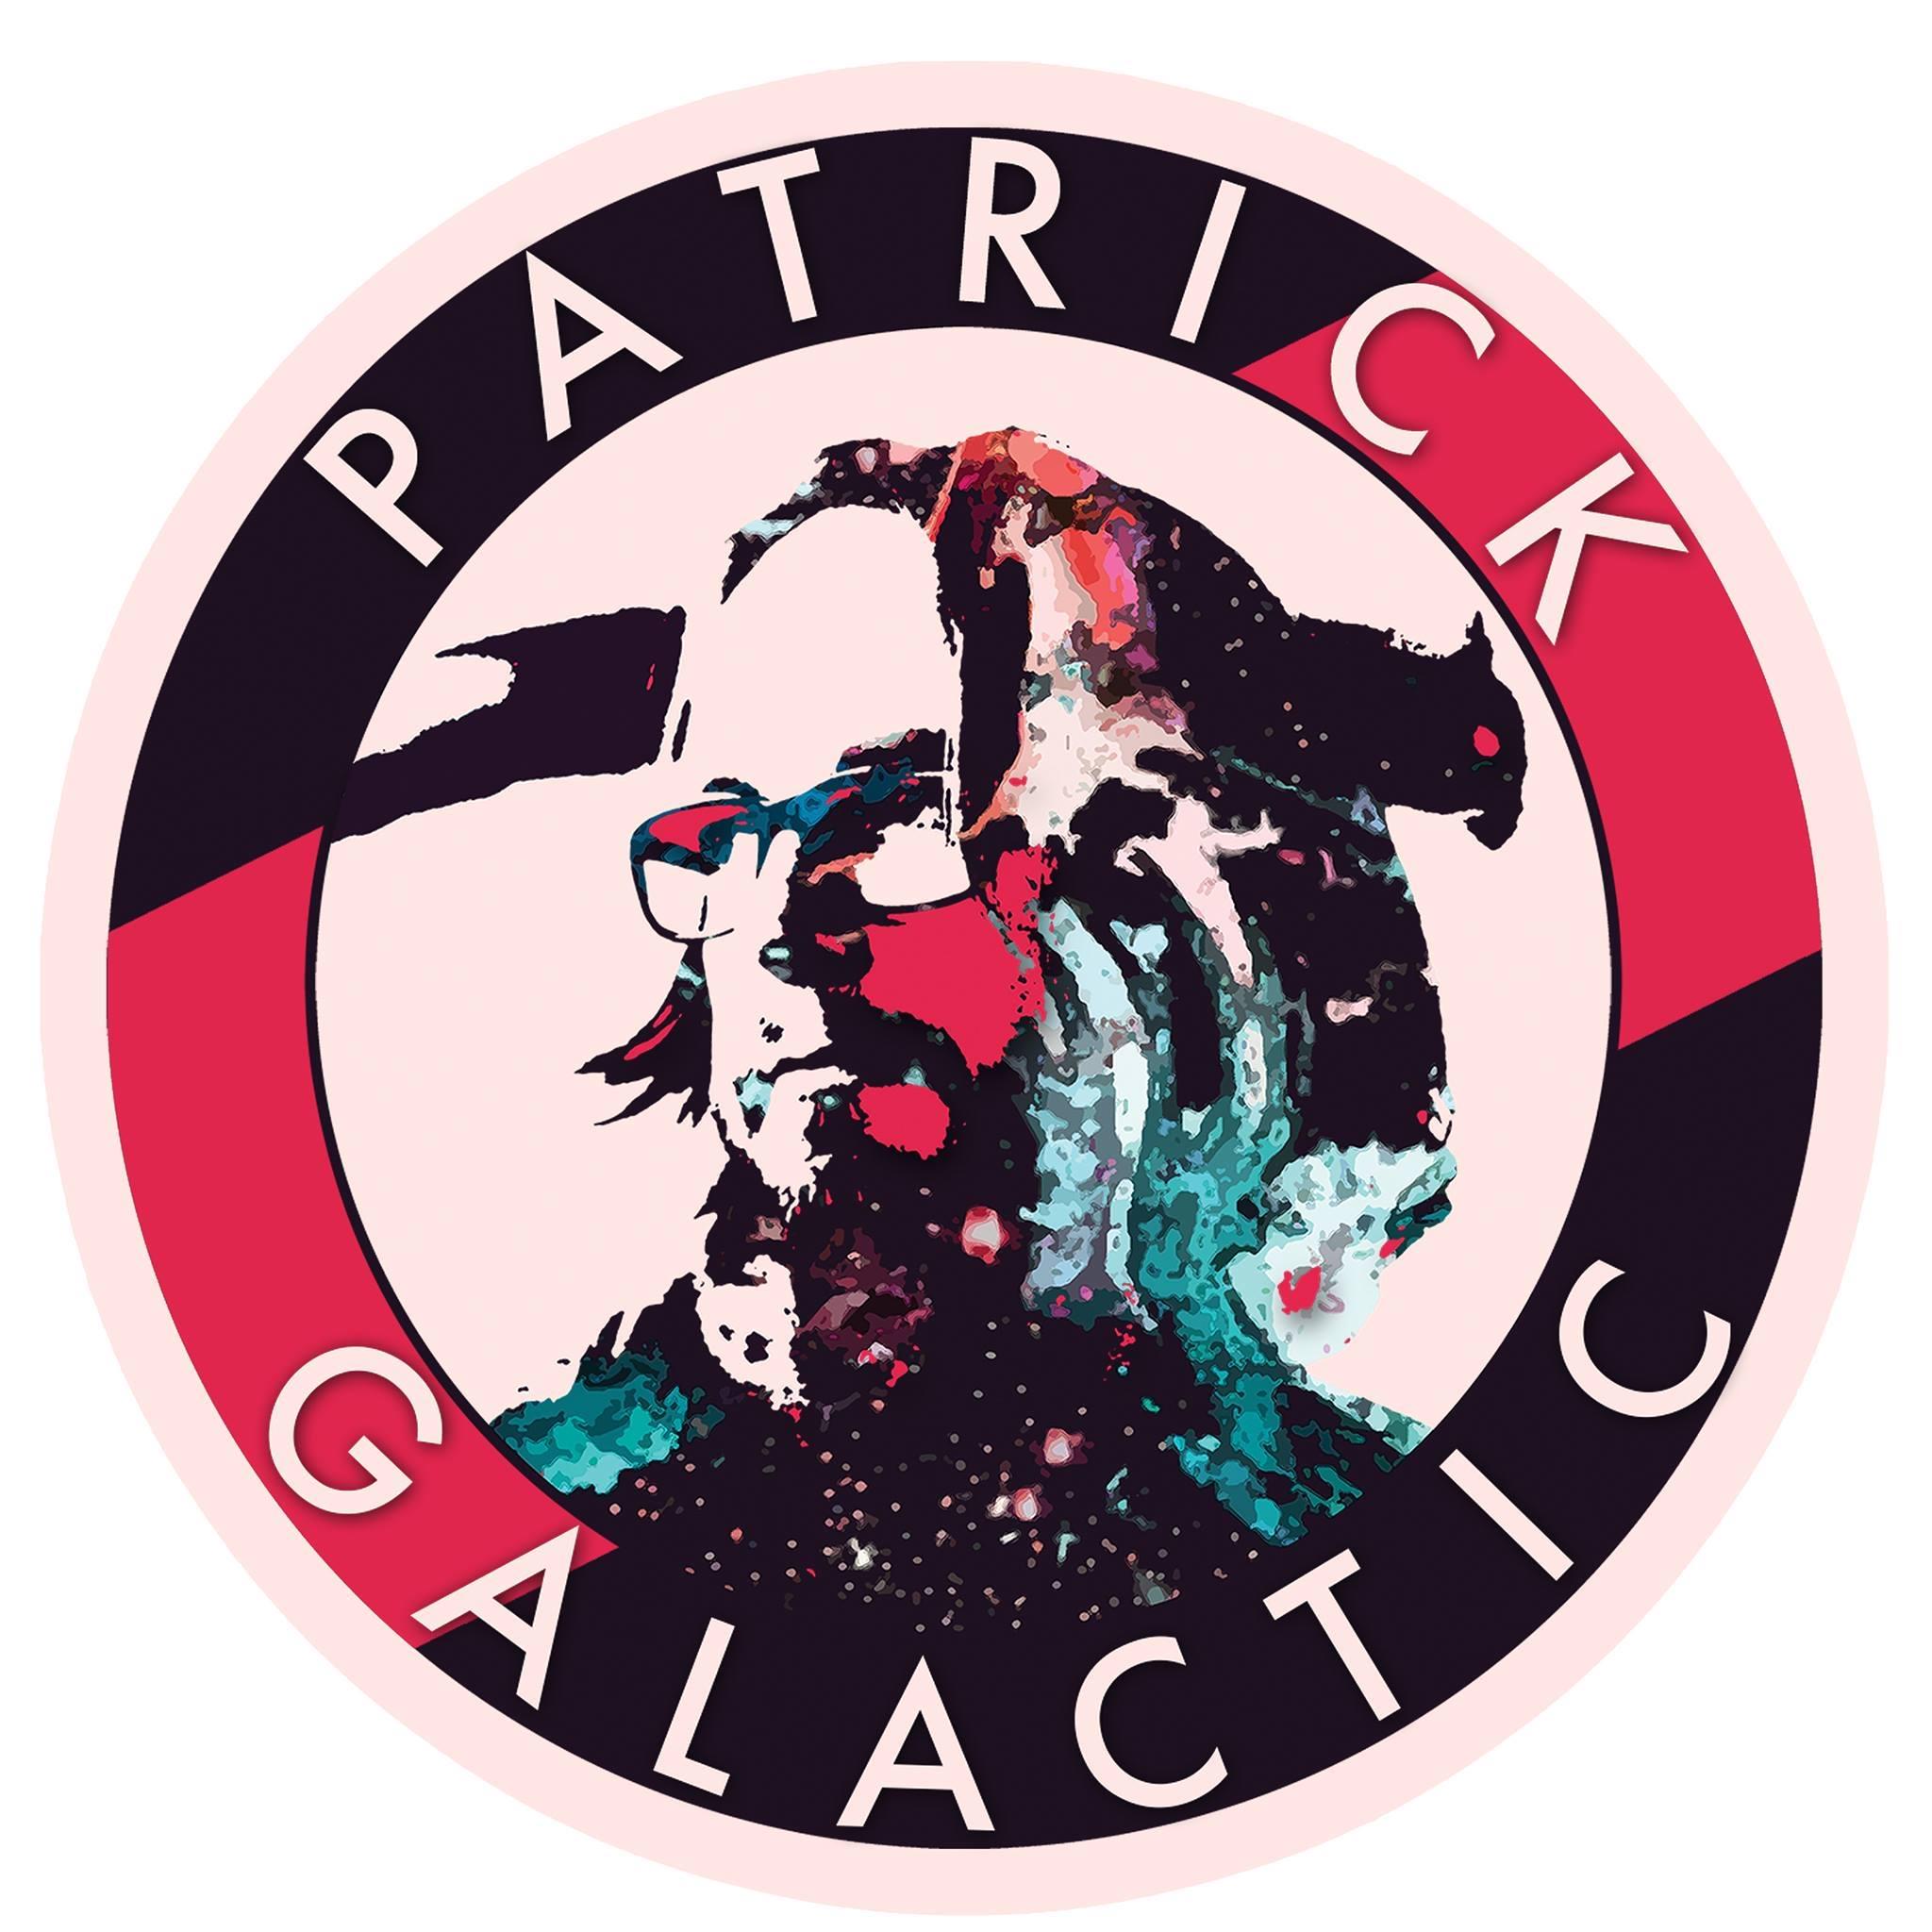 Patrick Galactic